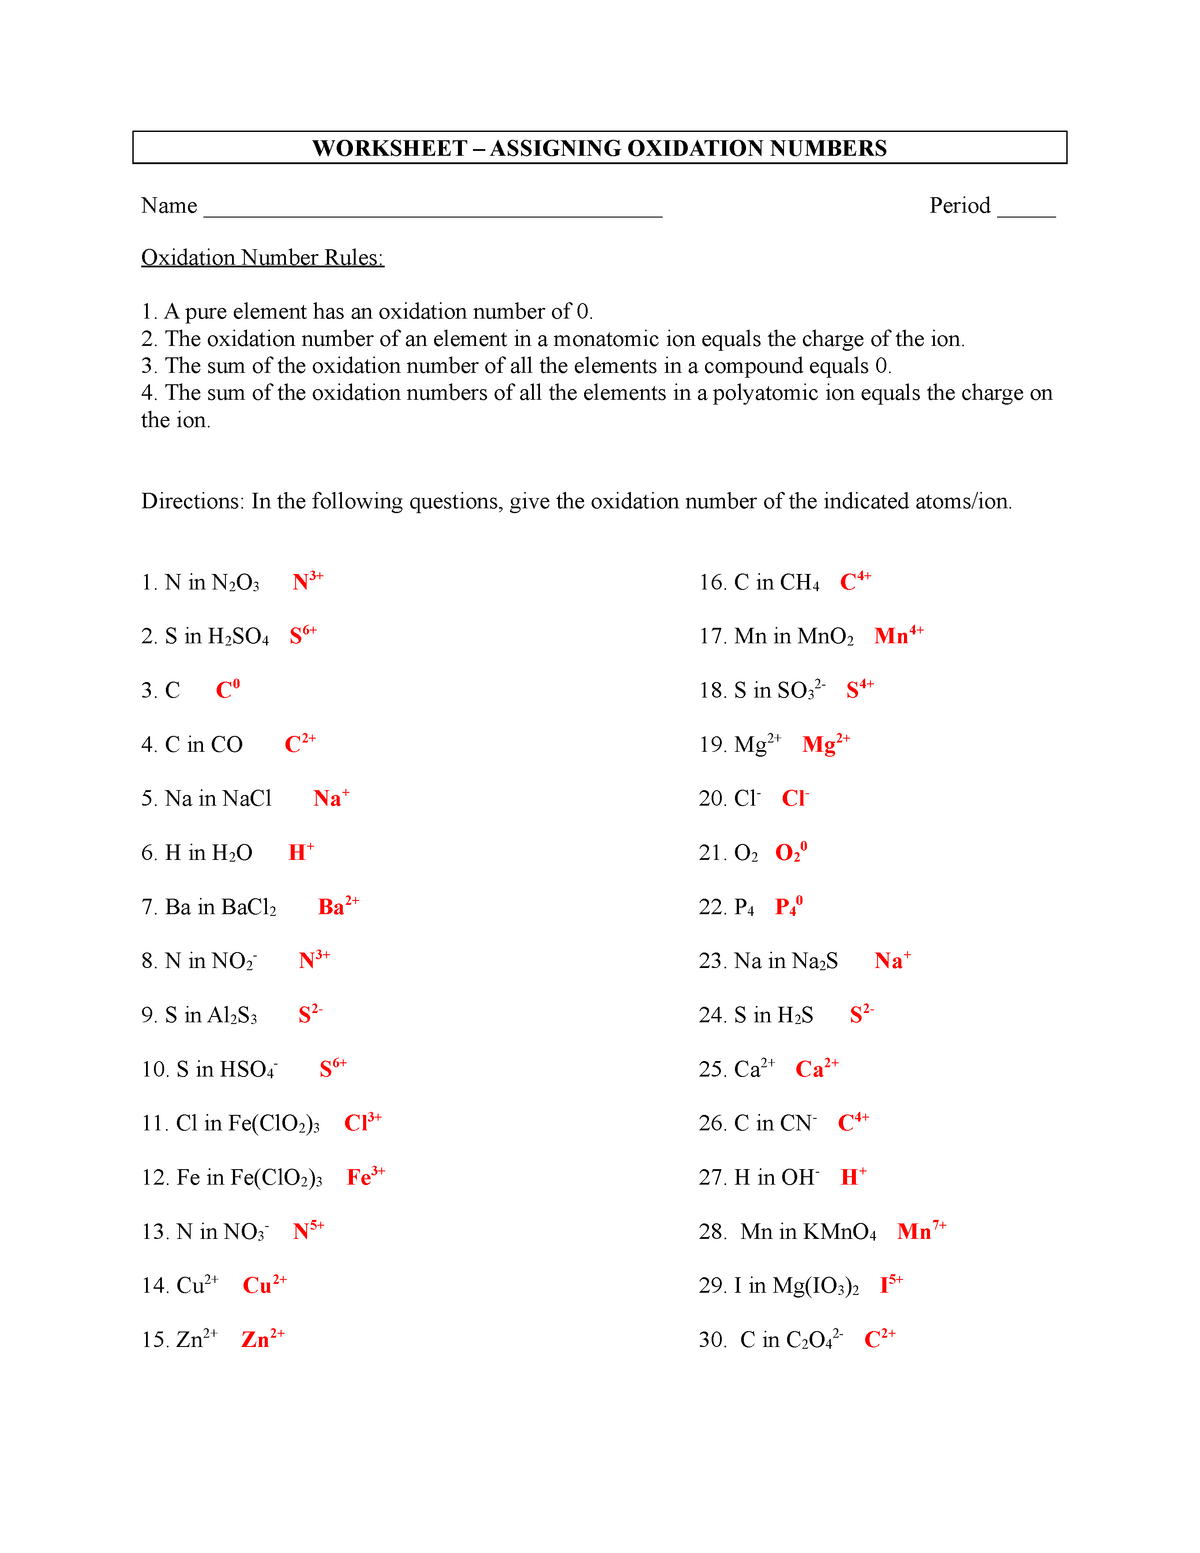 38 worksheet oxidation numbers answer key support worksheet